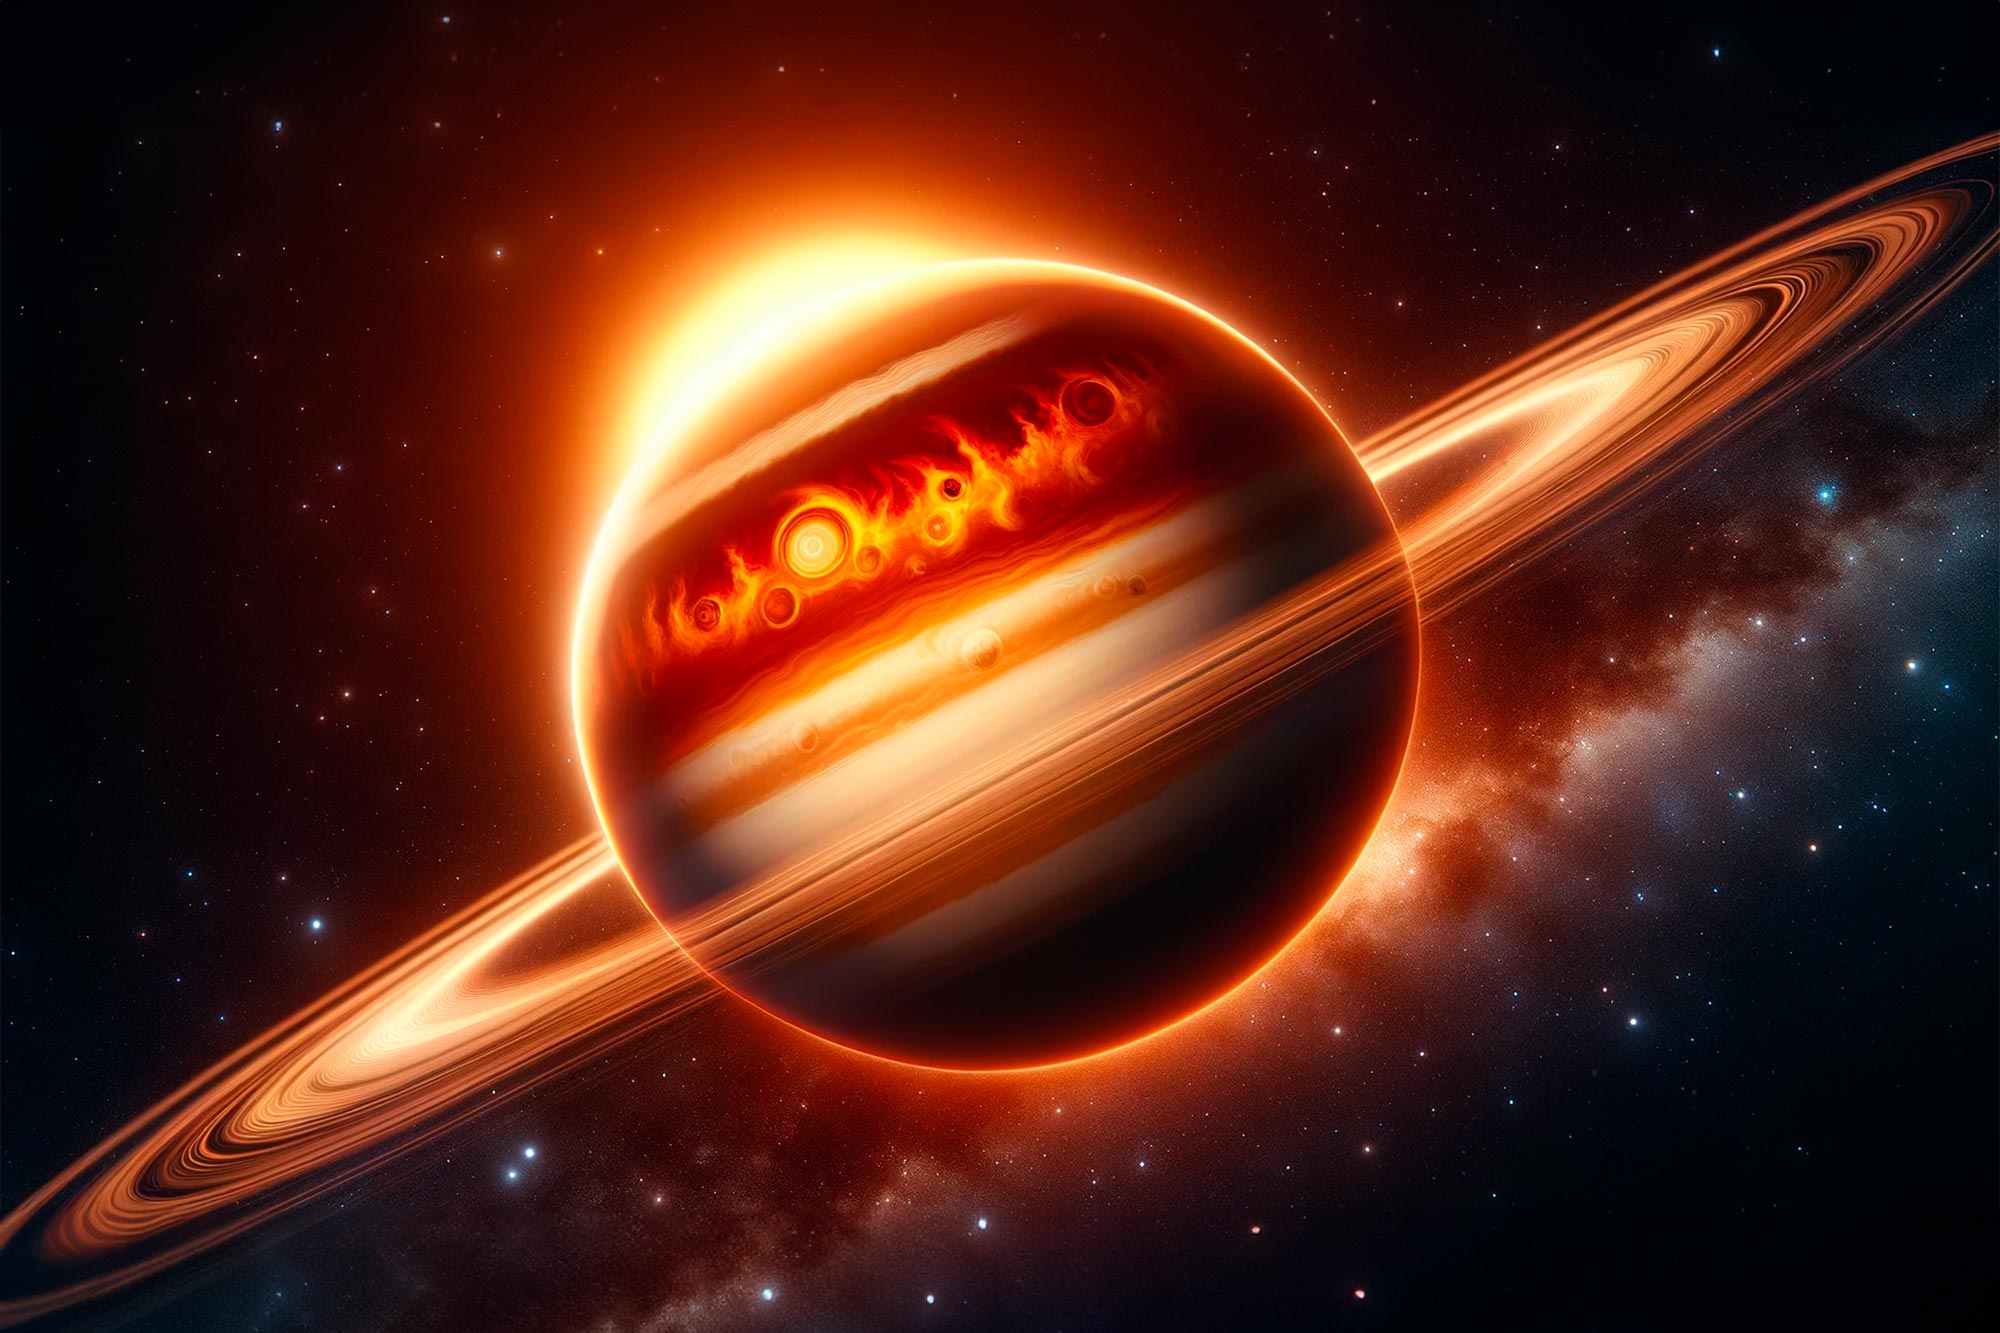 Mengungkap rahasia “Saturnus panas” dan bintang berbintiknya